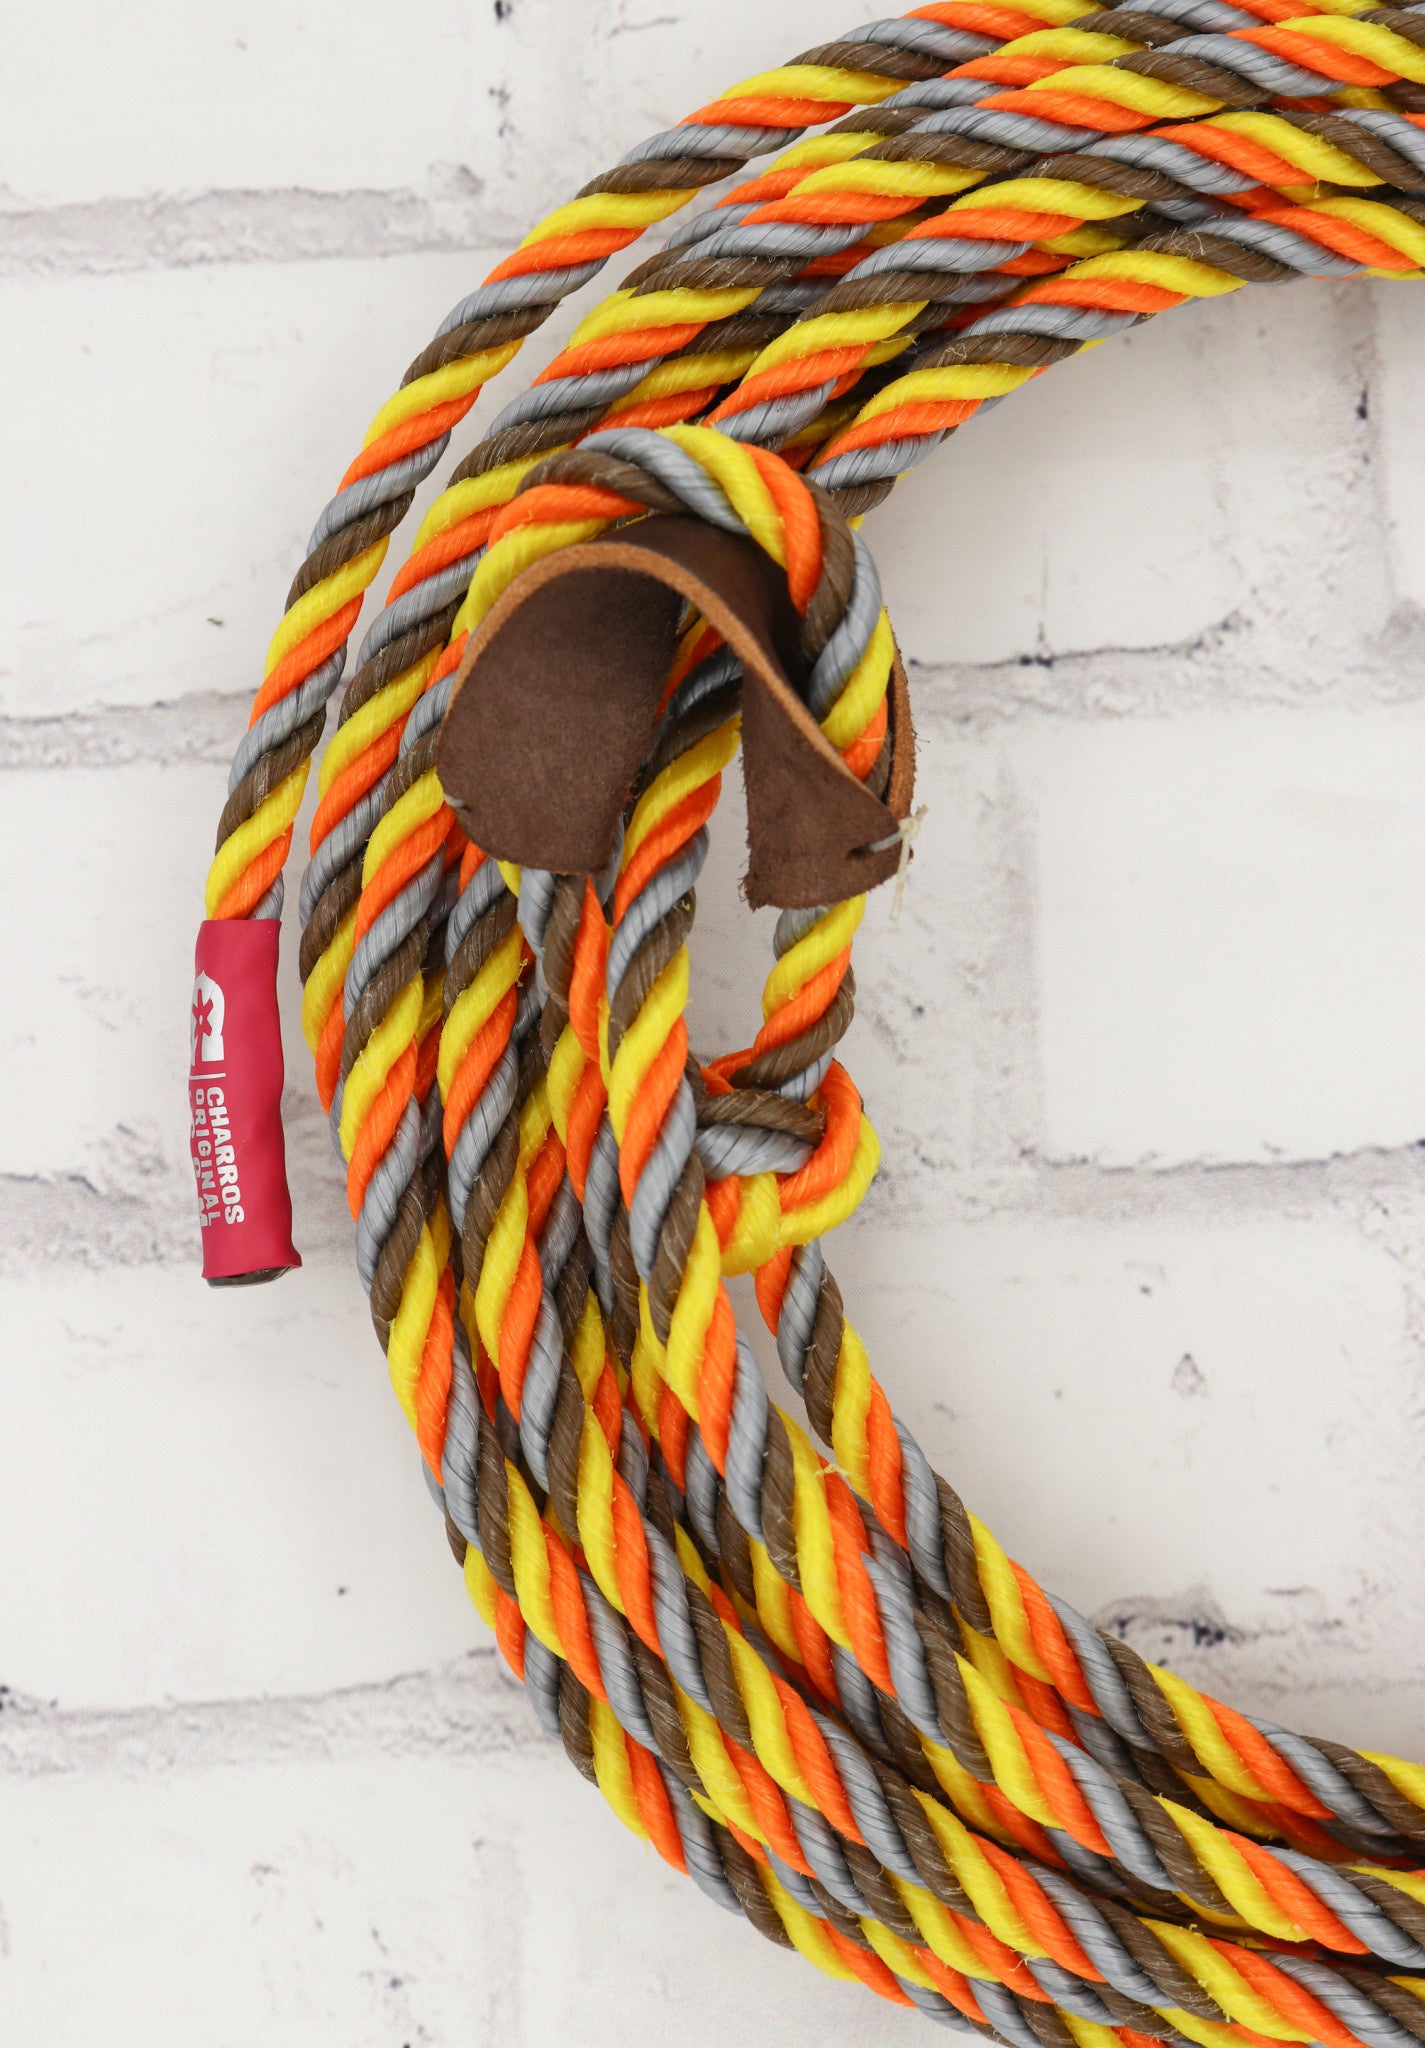 39 FT. Charro Trick Rope Yellow/Orange/Brown Soga Para Florear